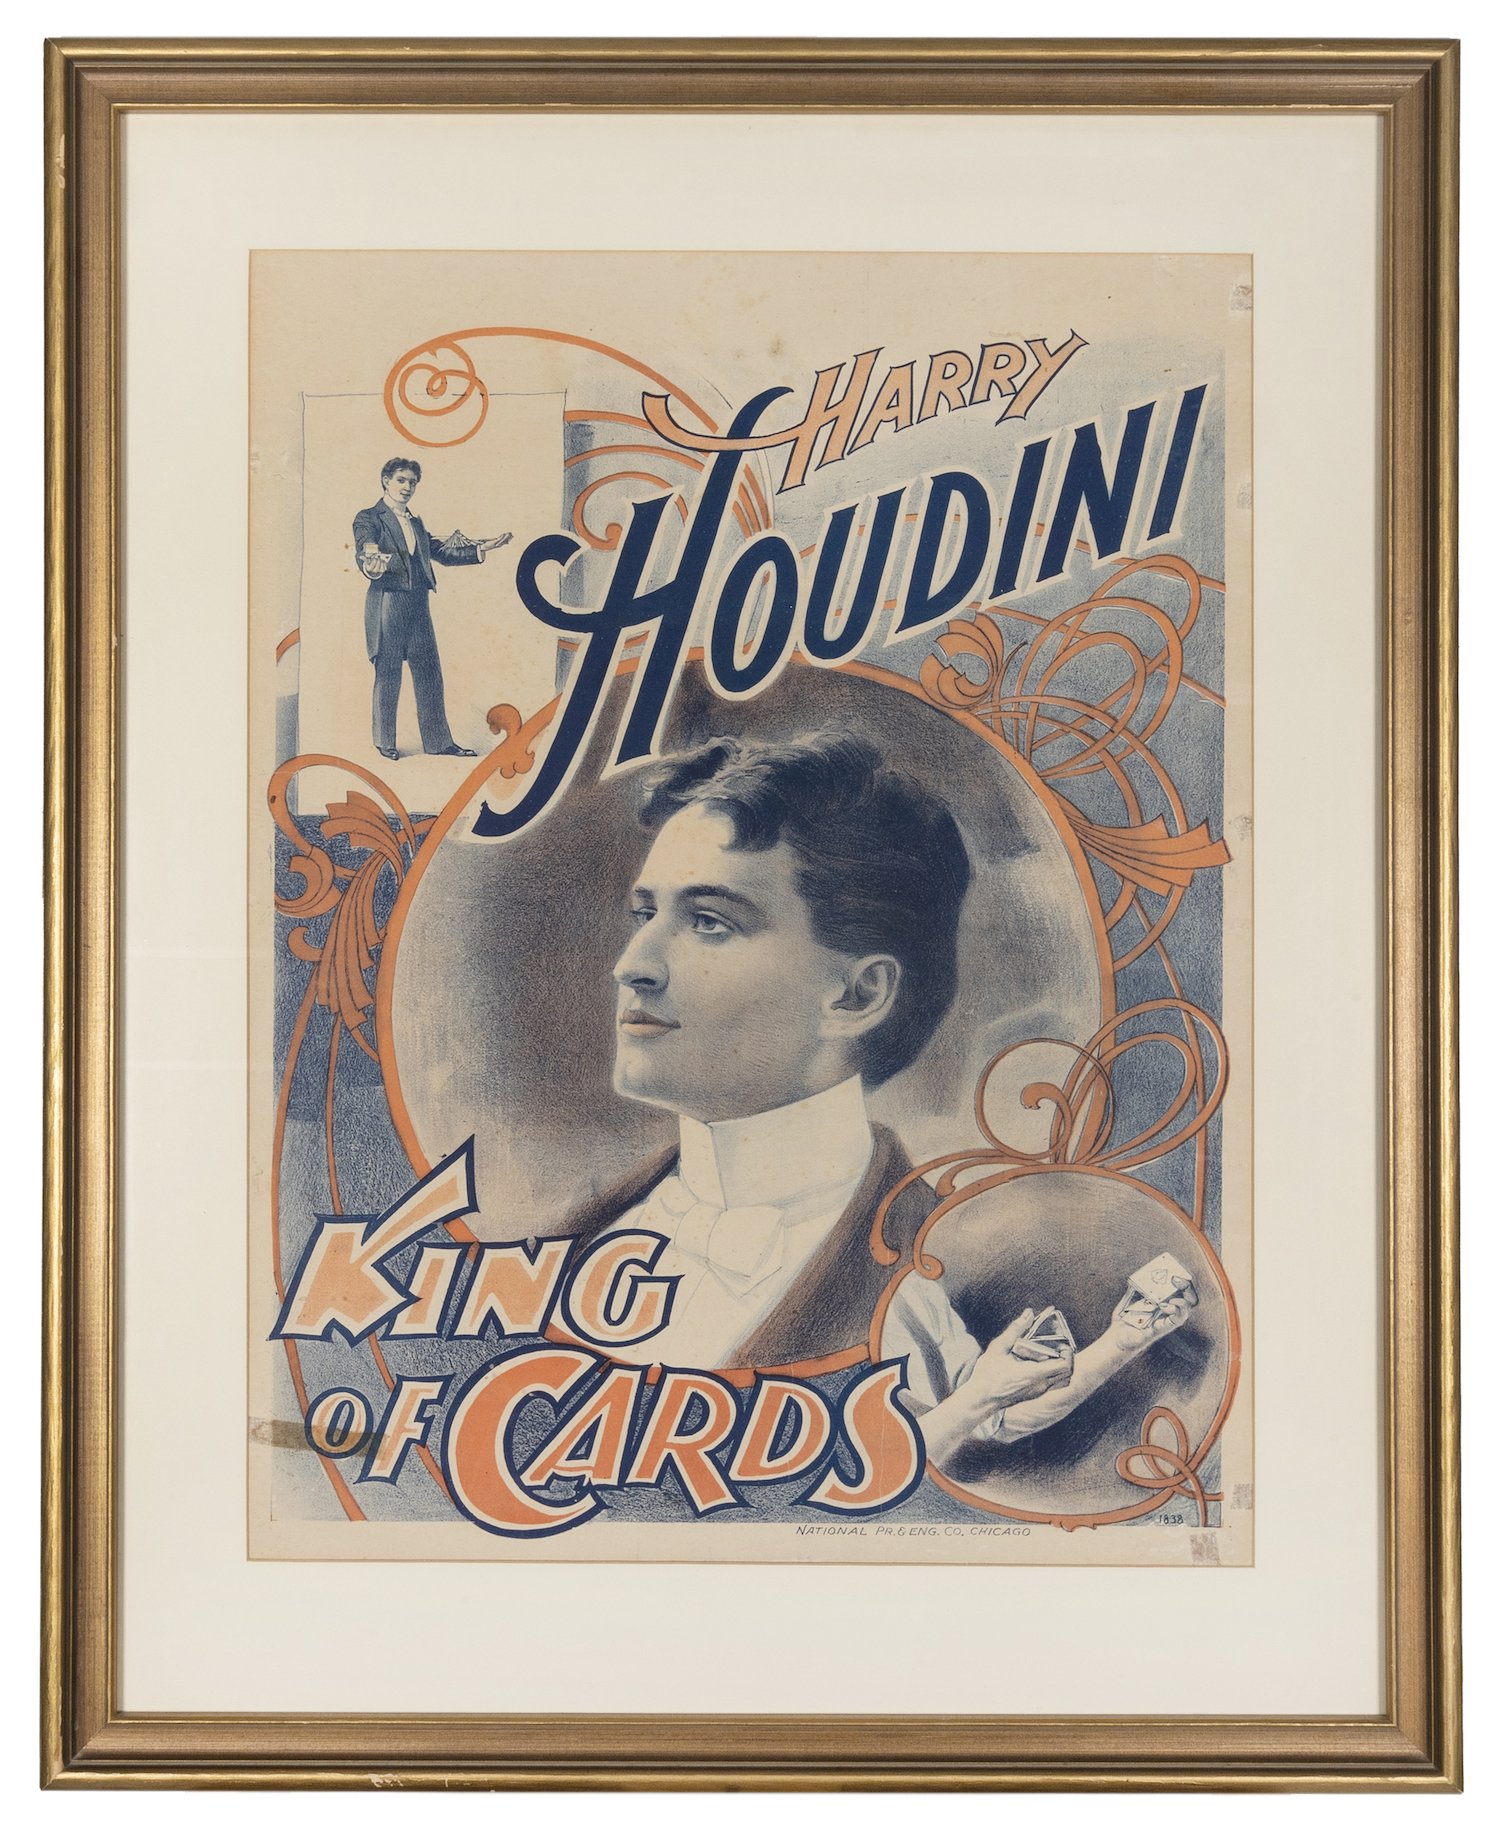 Harry Houdini American Escape Artist Illusionist and Stunt Performer